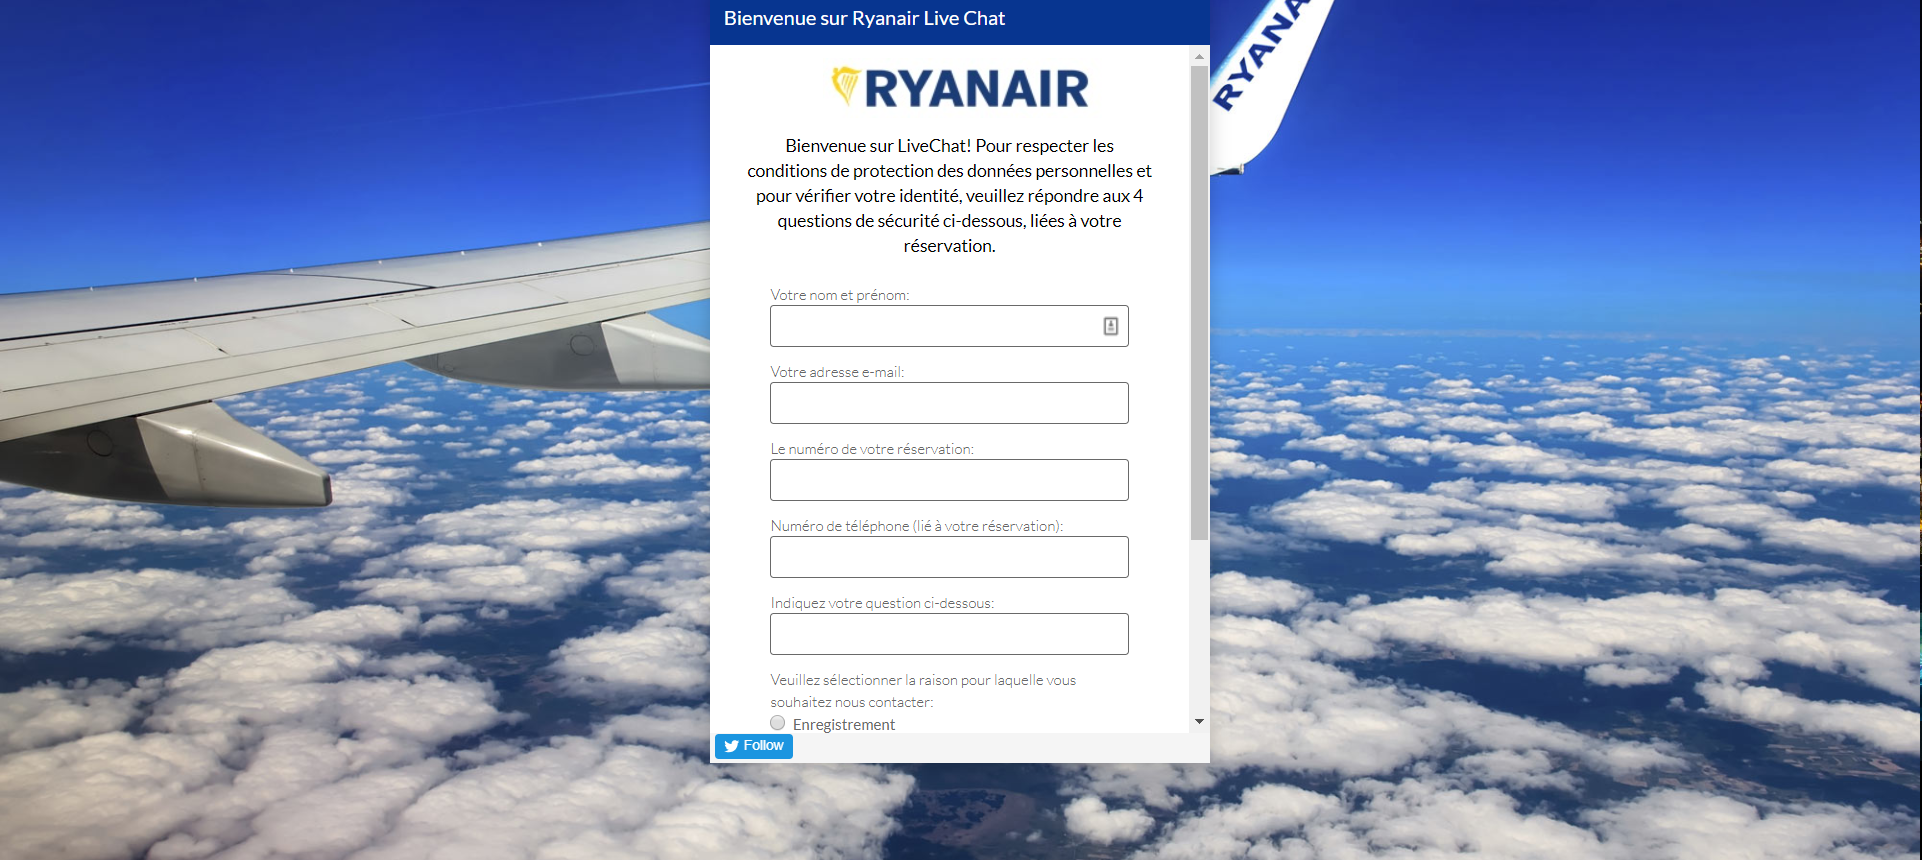 Ryanair Livechat